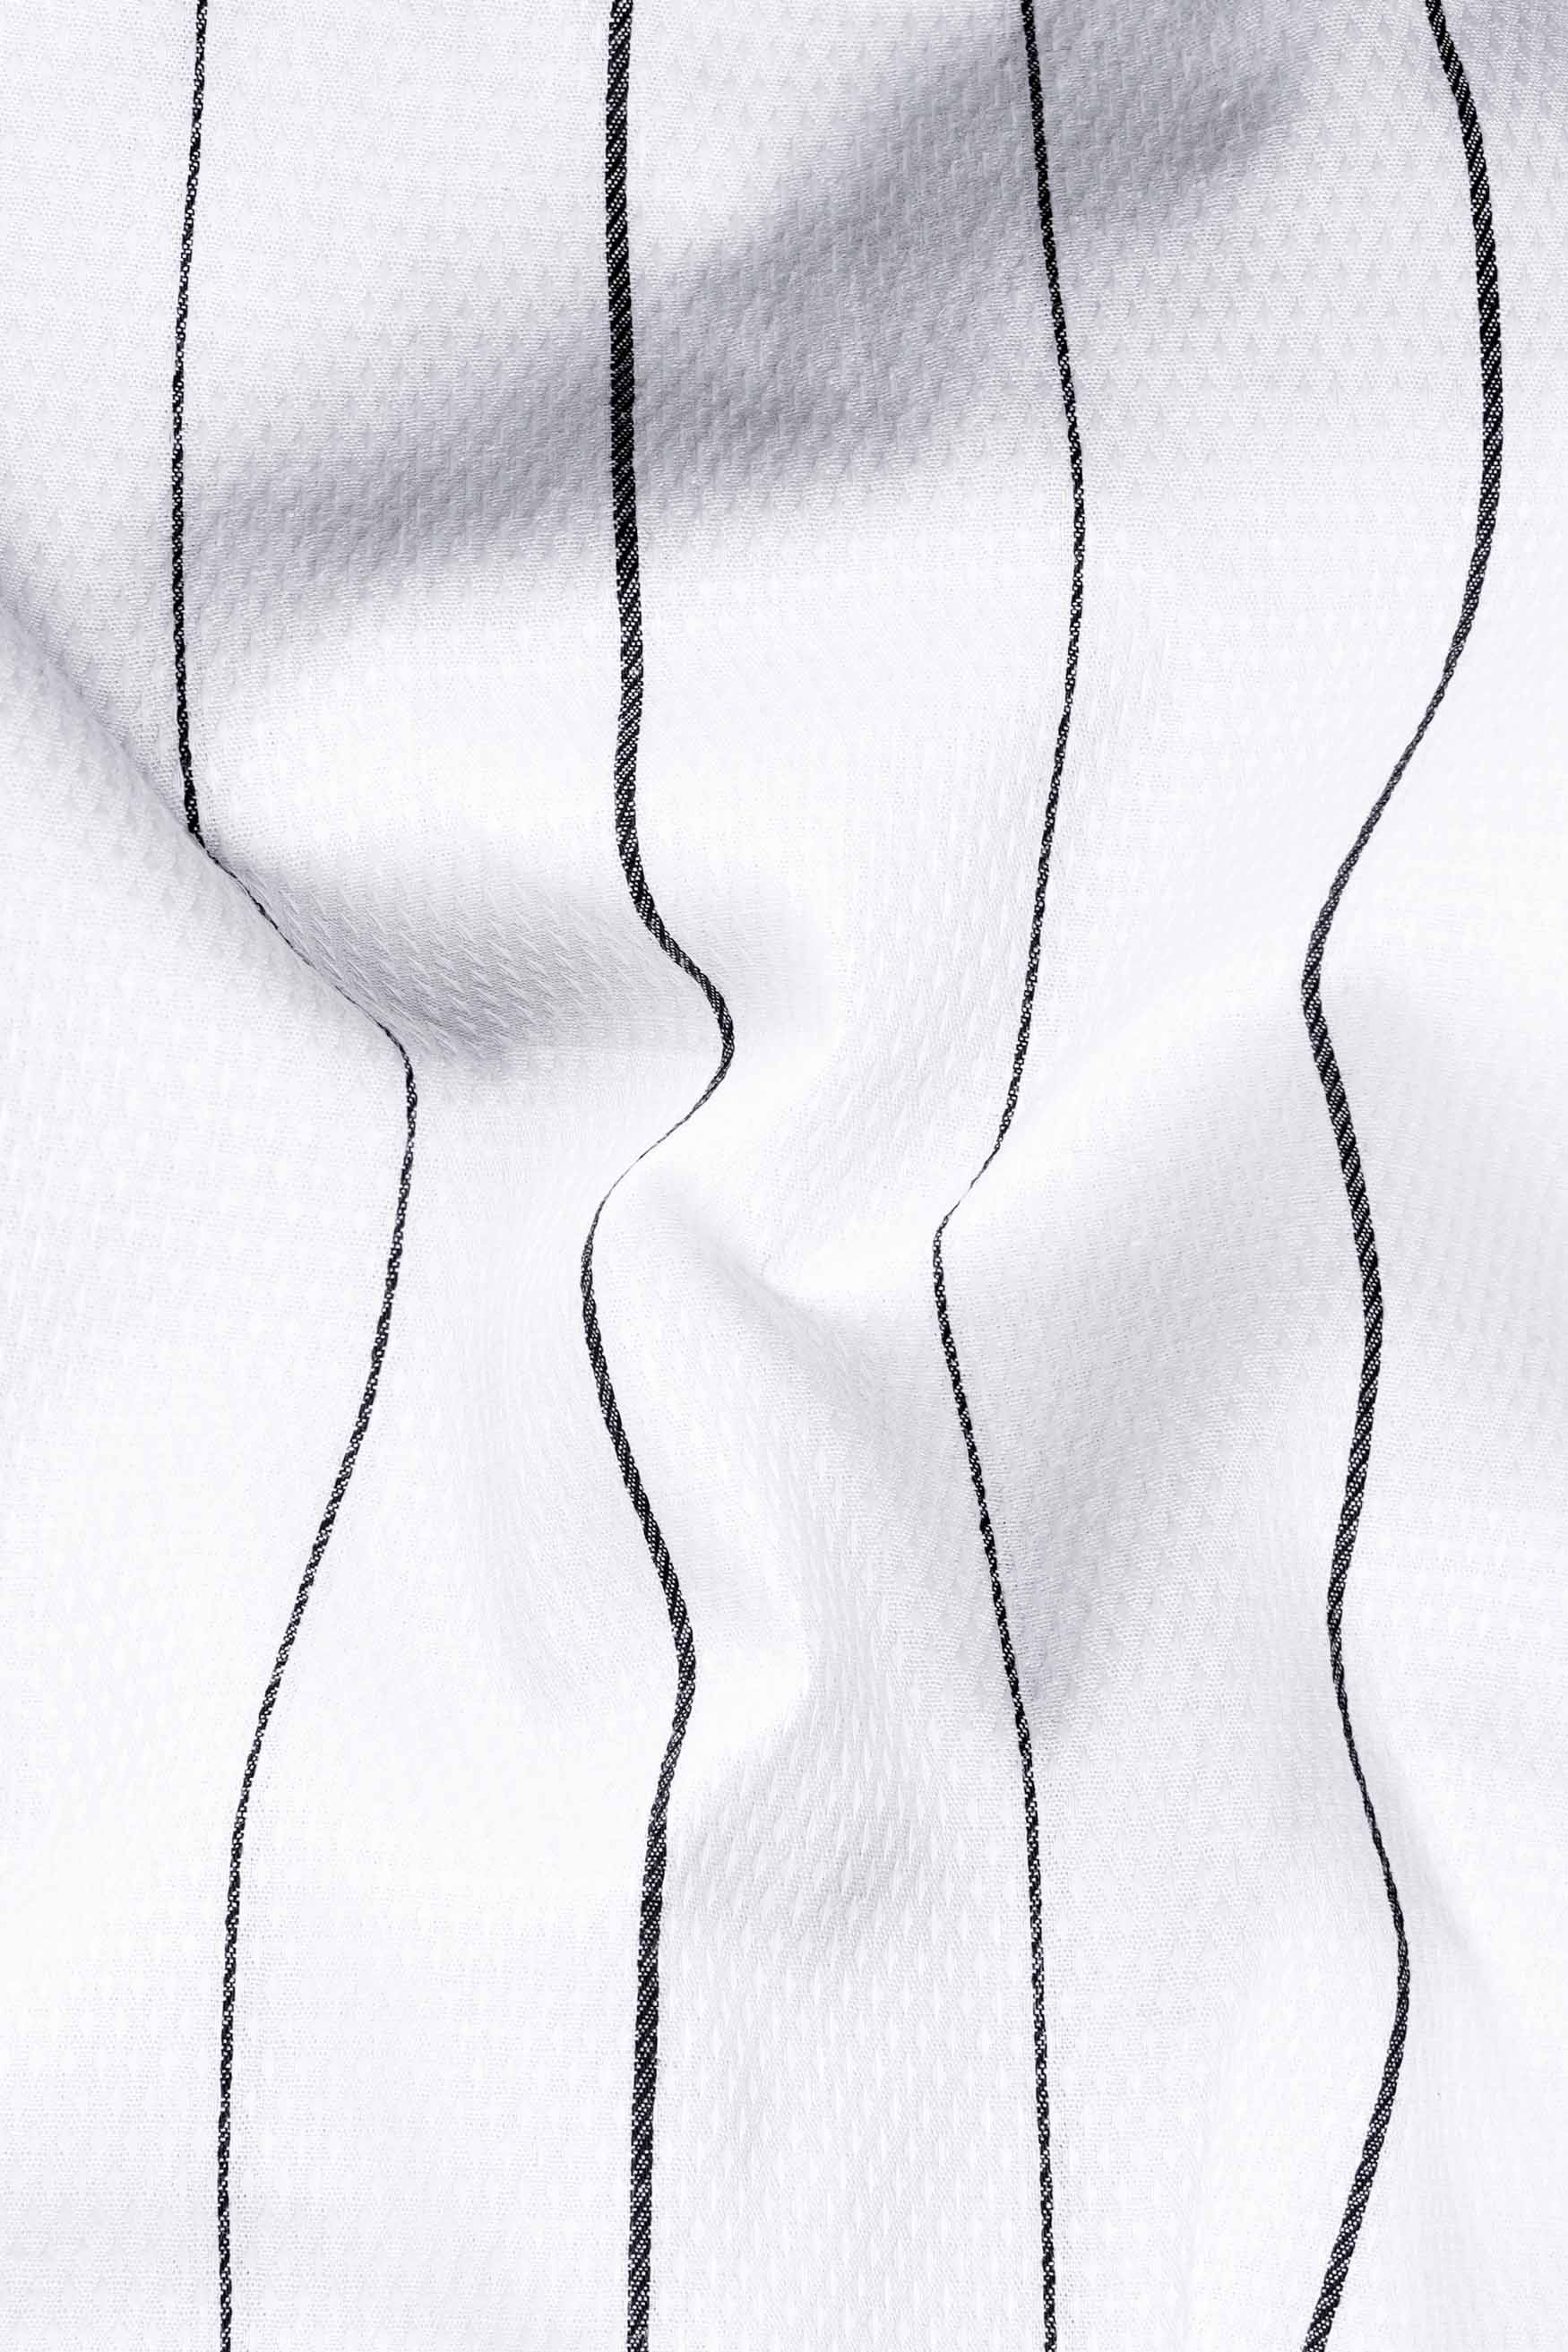 Bright White and Black Striped Dobby Textured Premium Giza Cotton Shirt 11490-CA-38, 11490-CA-H-38, 11490-CA-39, 11490-CA-H-39, 11490-CA-40, 11490-CA-H-40, 11490-CA-42, 11490-CA-H-42, 11490-CA-44, 11490-CA-H-44, 11490-CA-46, 11490-CA-H-46, 11490-CA-48, 11490-CA-H-48, 11490-CA-50, 11490-CA-H-50, 11490-CA-52, 11490-CA-H-52